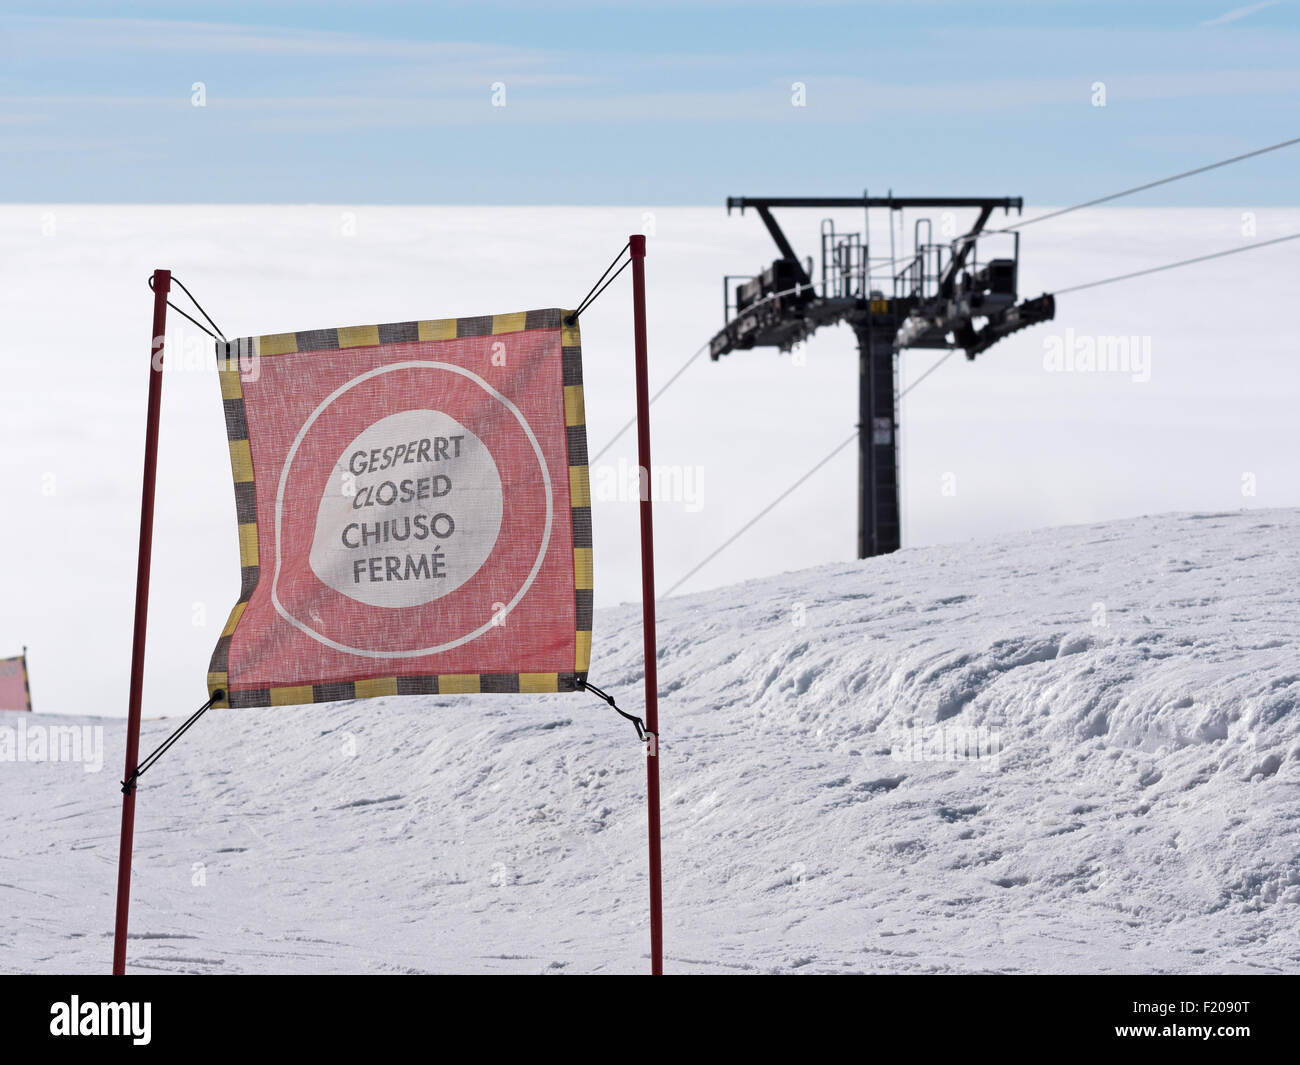 Warnung "Skiabfahrt gesperrt" Stock Photo